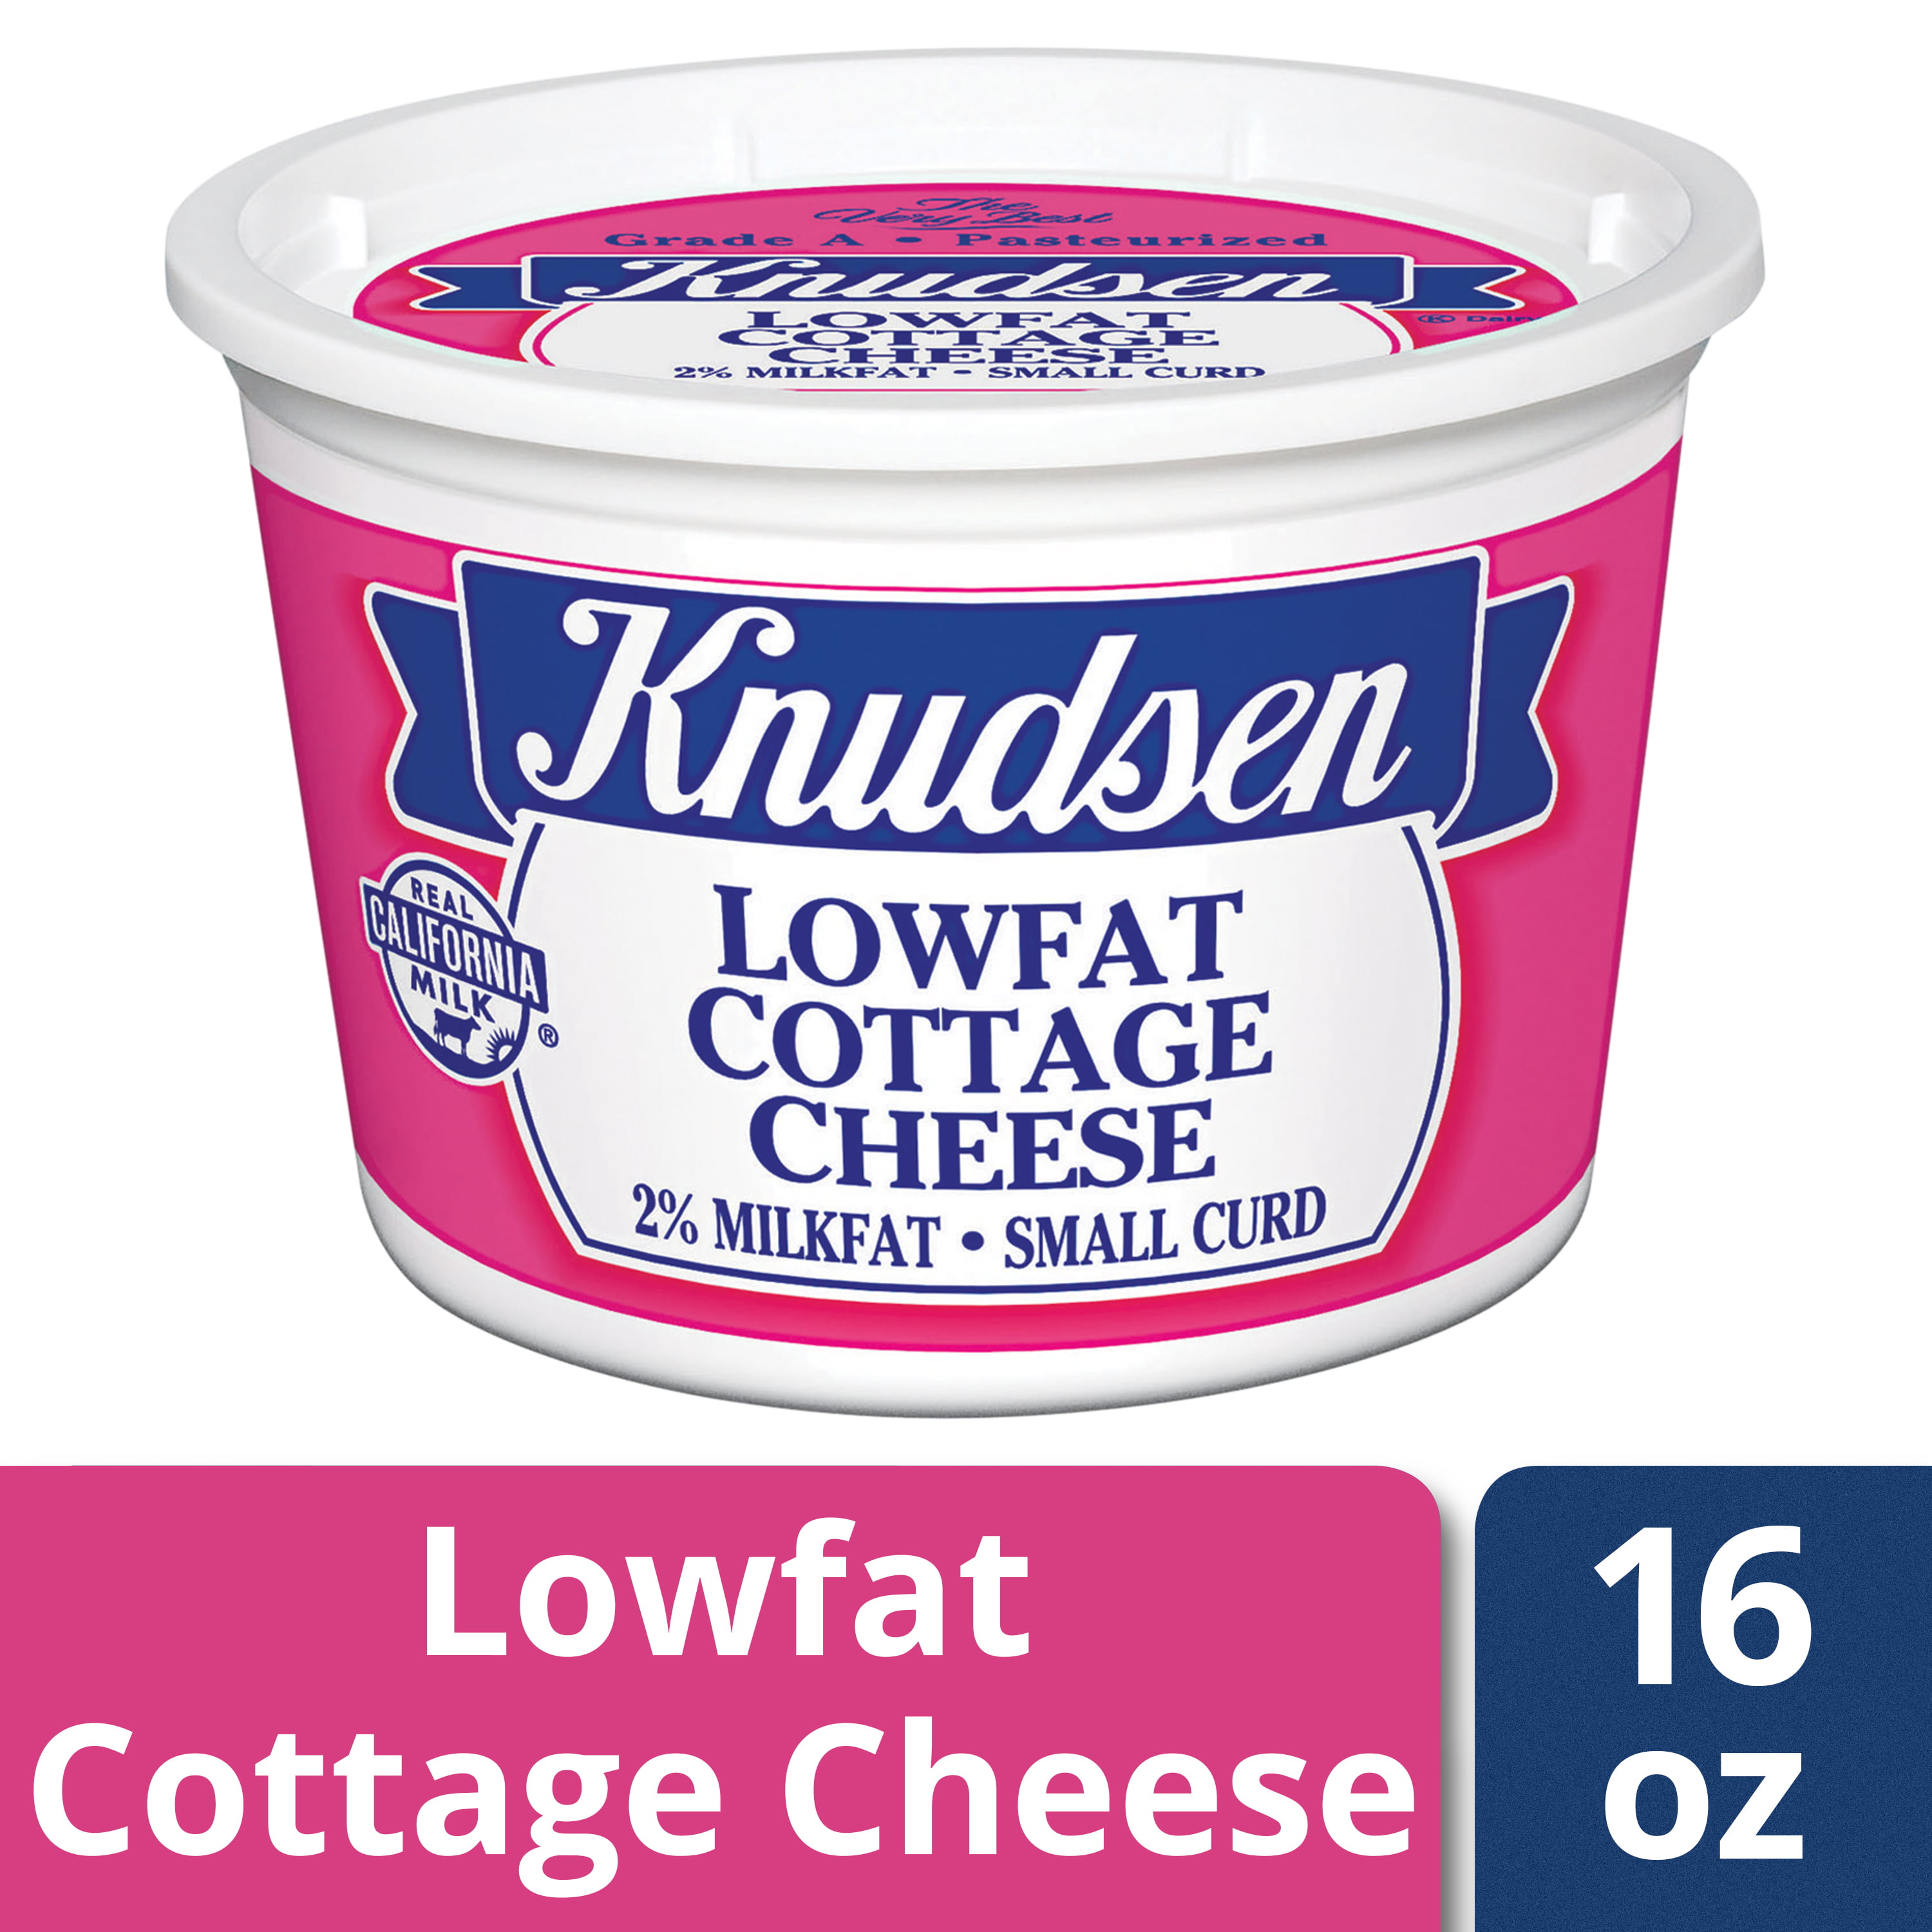 Knudsen Small Curd Low Fat 2 Milkfat Cottage Cheese 16 Oz Tub